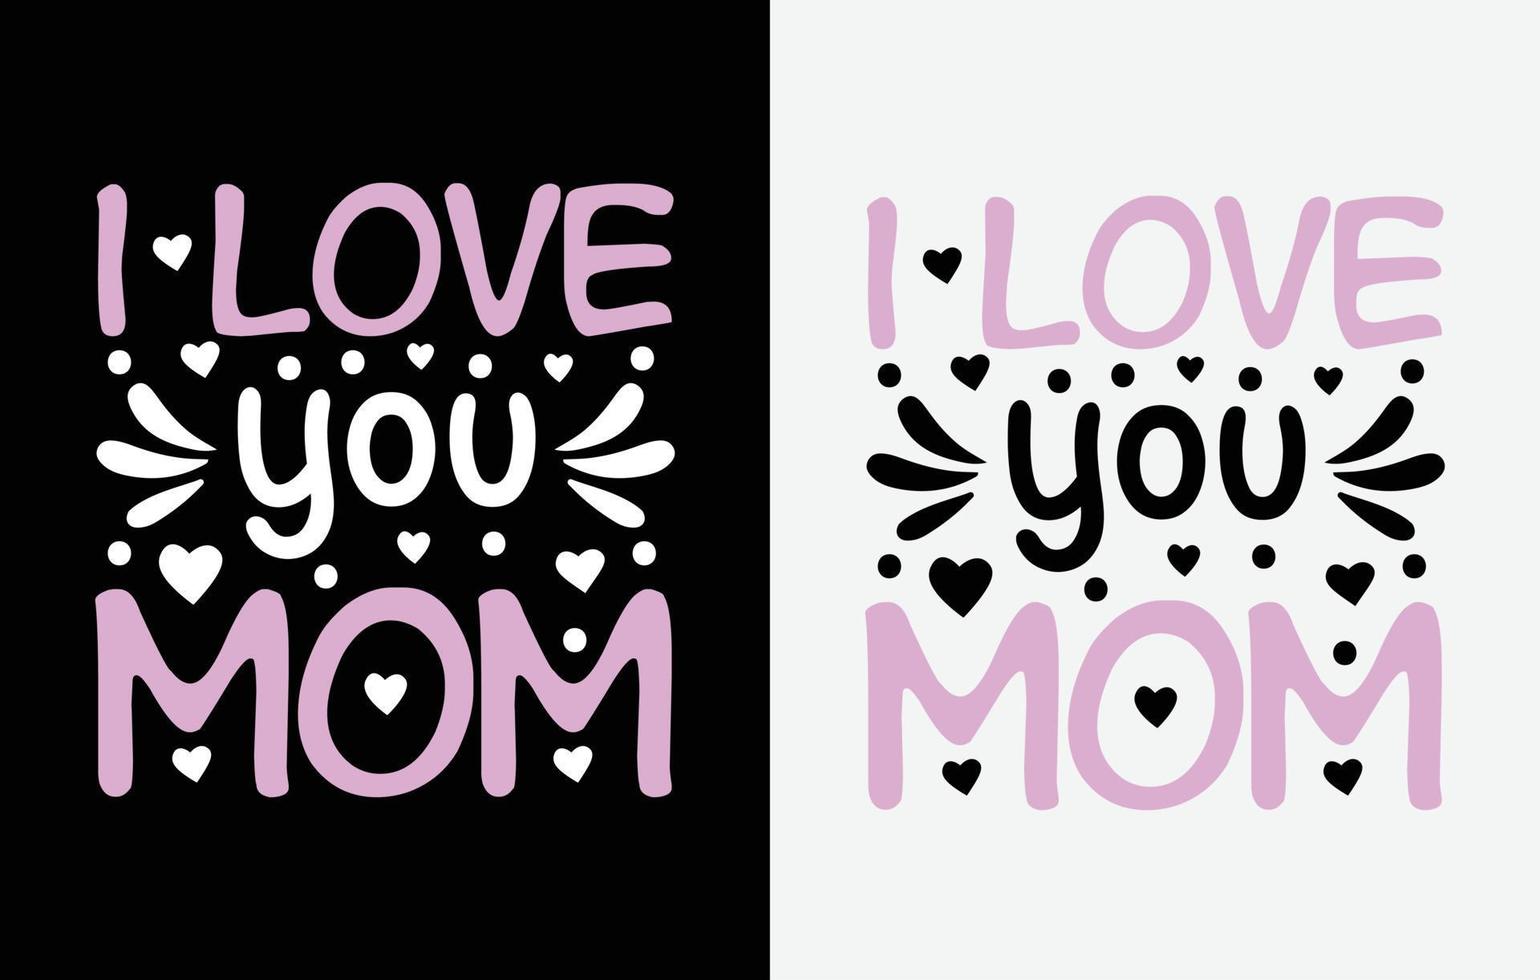 Web Mom t-shirt design, mother's day t-shirt, mother's day typography t-shirt, mom t-shirt template vector